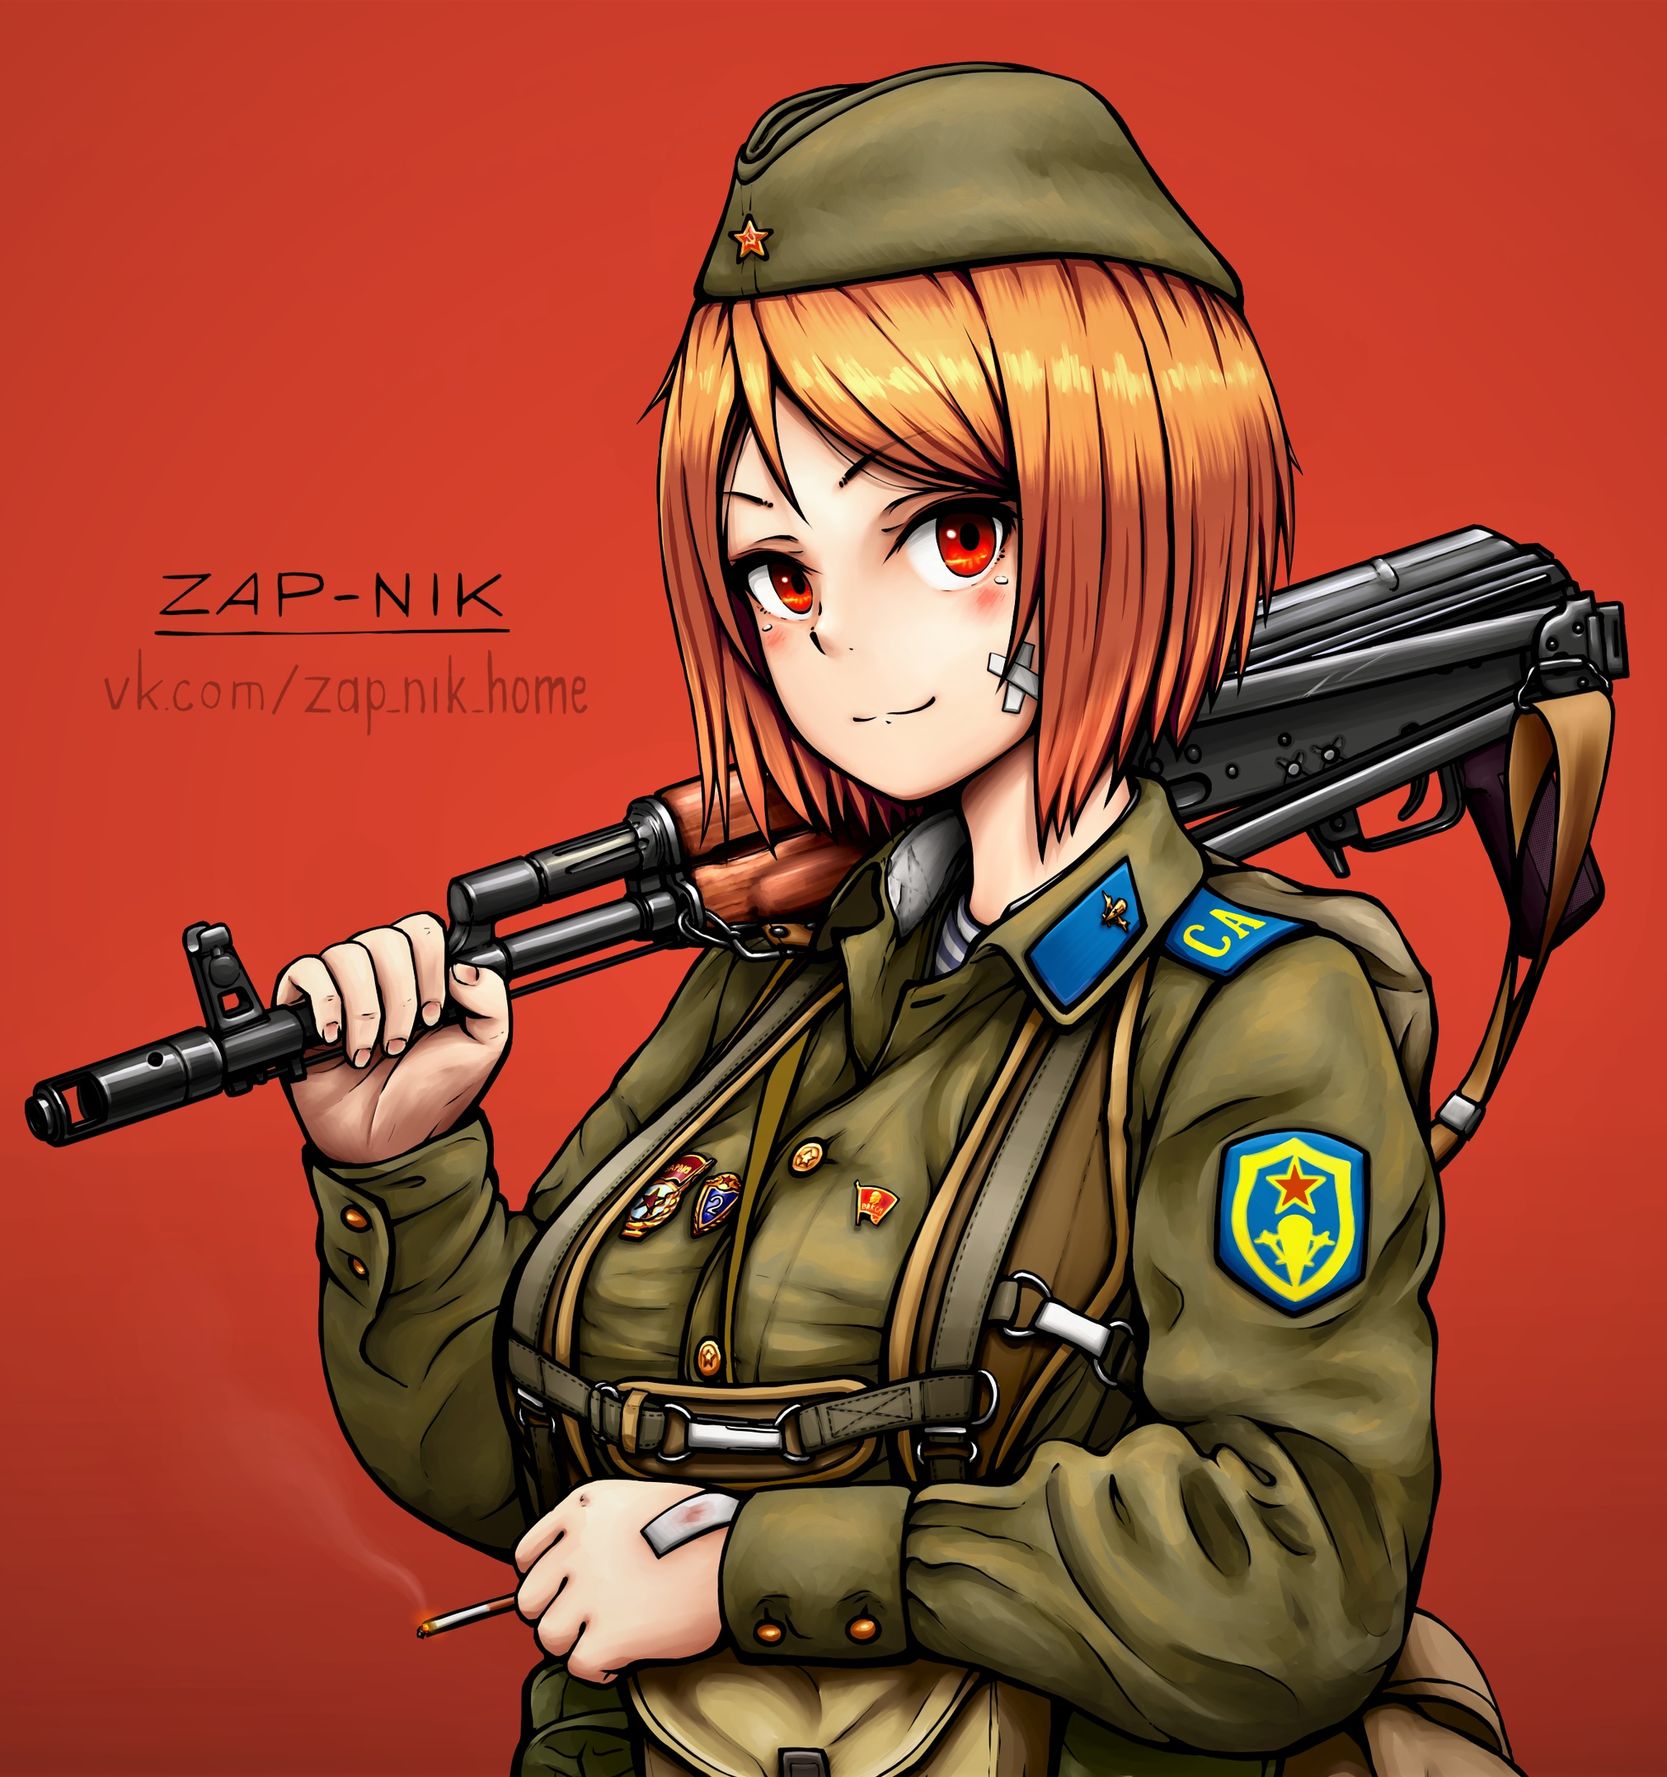 Military anime girl with kalashnikov ak-47: Original anime characters (Artist: ZAP-NIK)